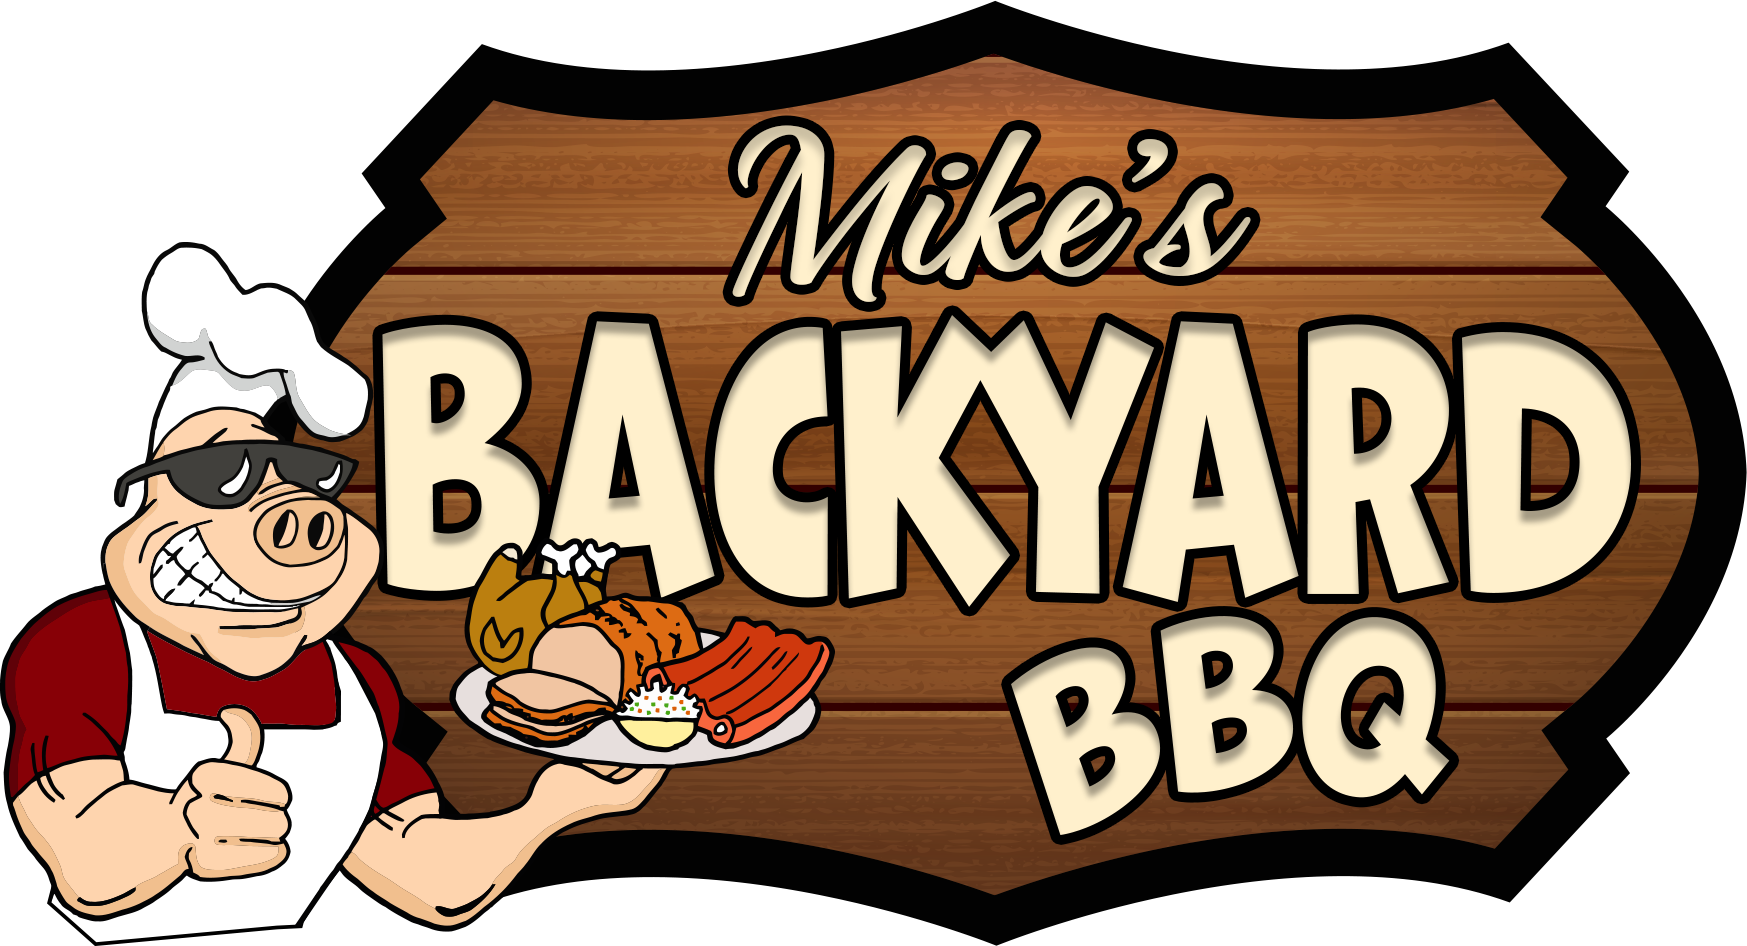 Mikes Backyard Barbecue